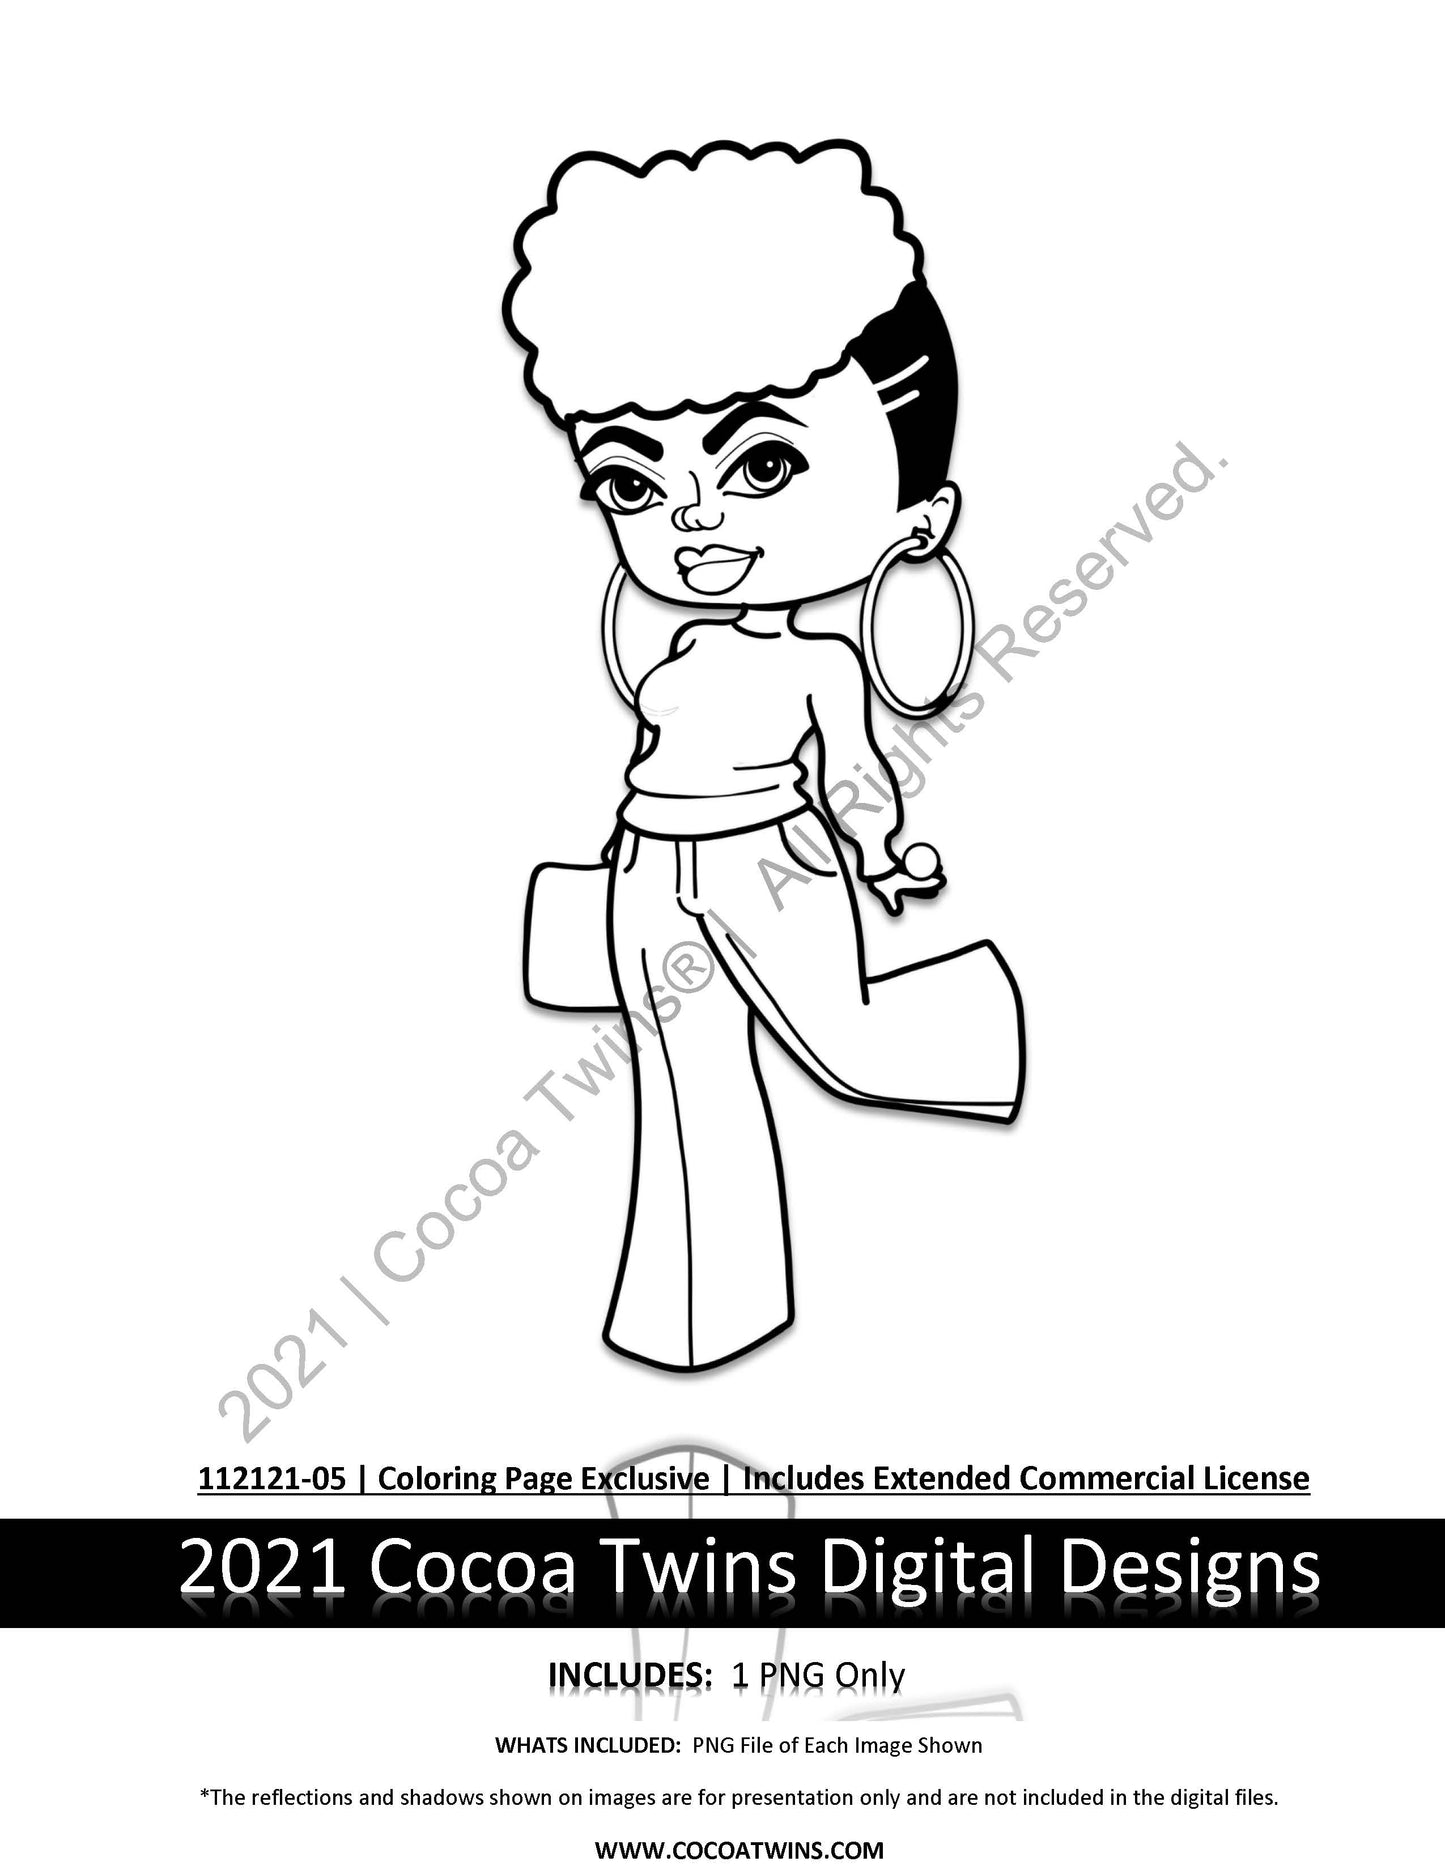 112121-05  | Limited Release Exclusive Image Set | 2021 | Exclusive Colorable Digi Dolls